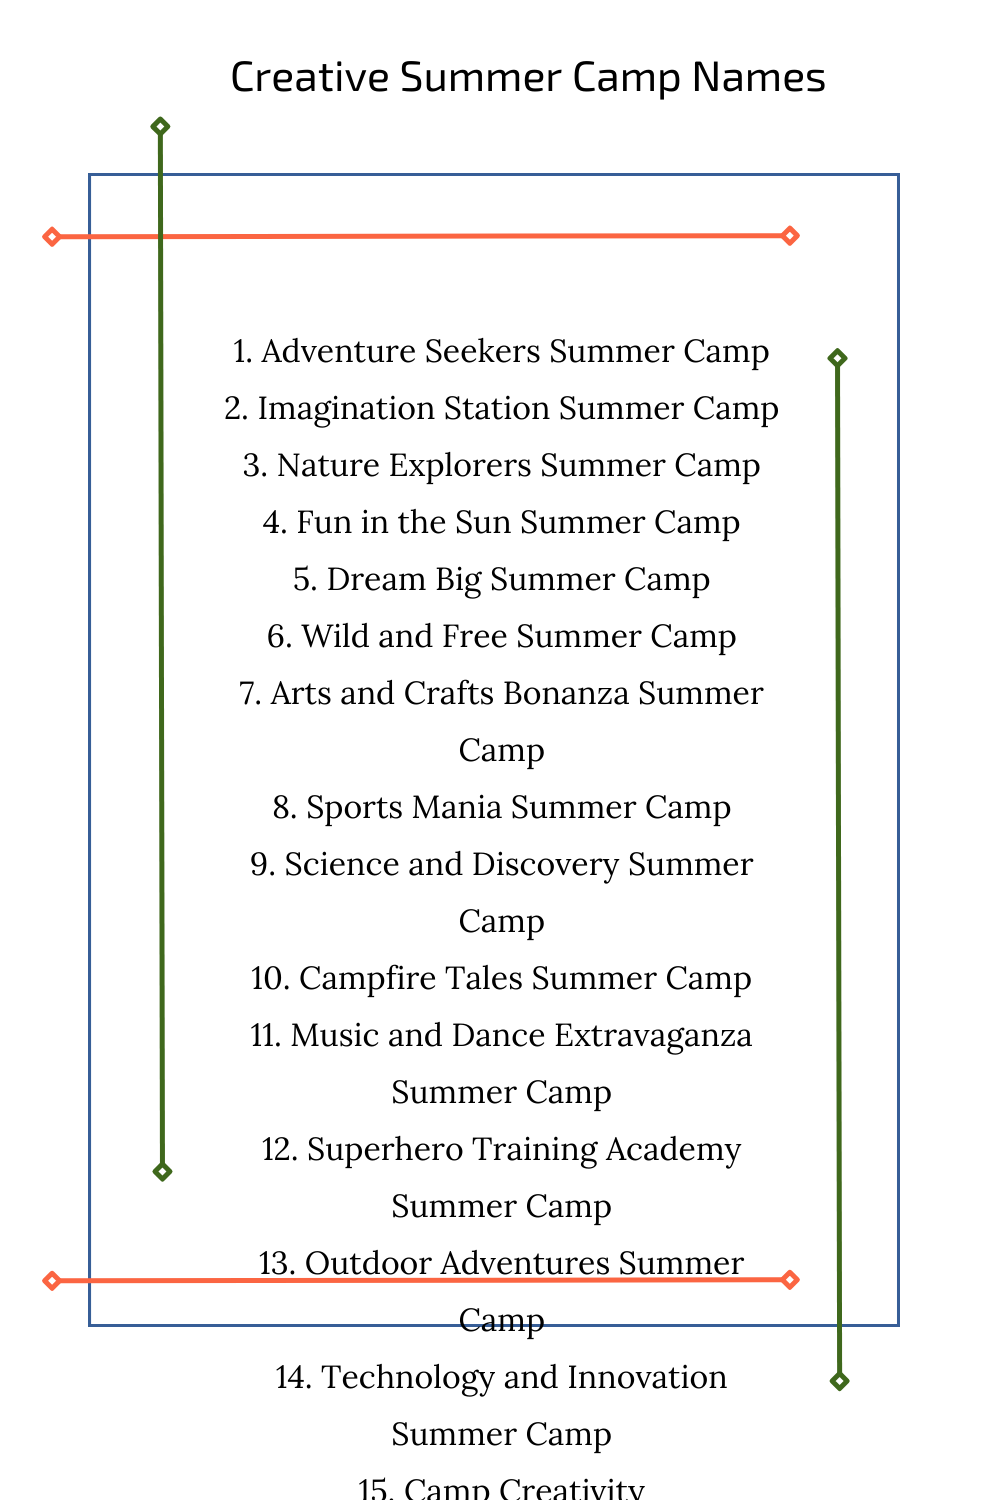 Creative Summer Camp Names